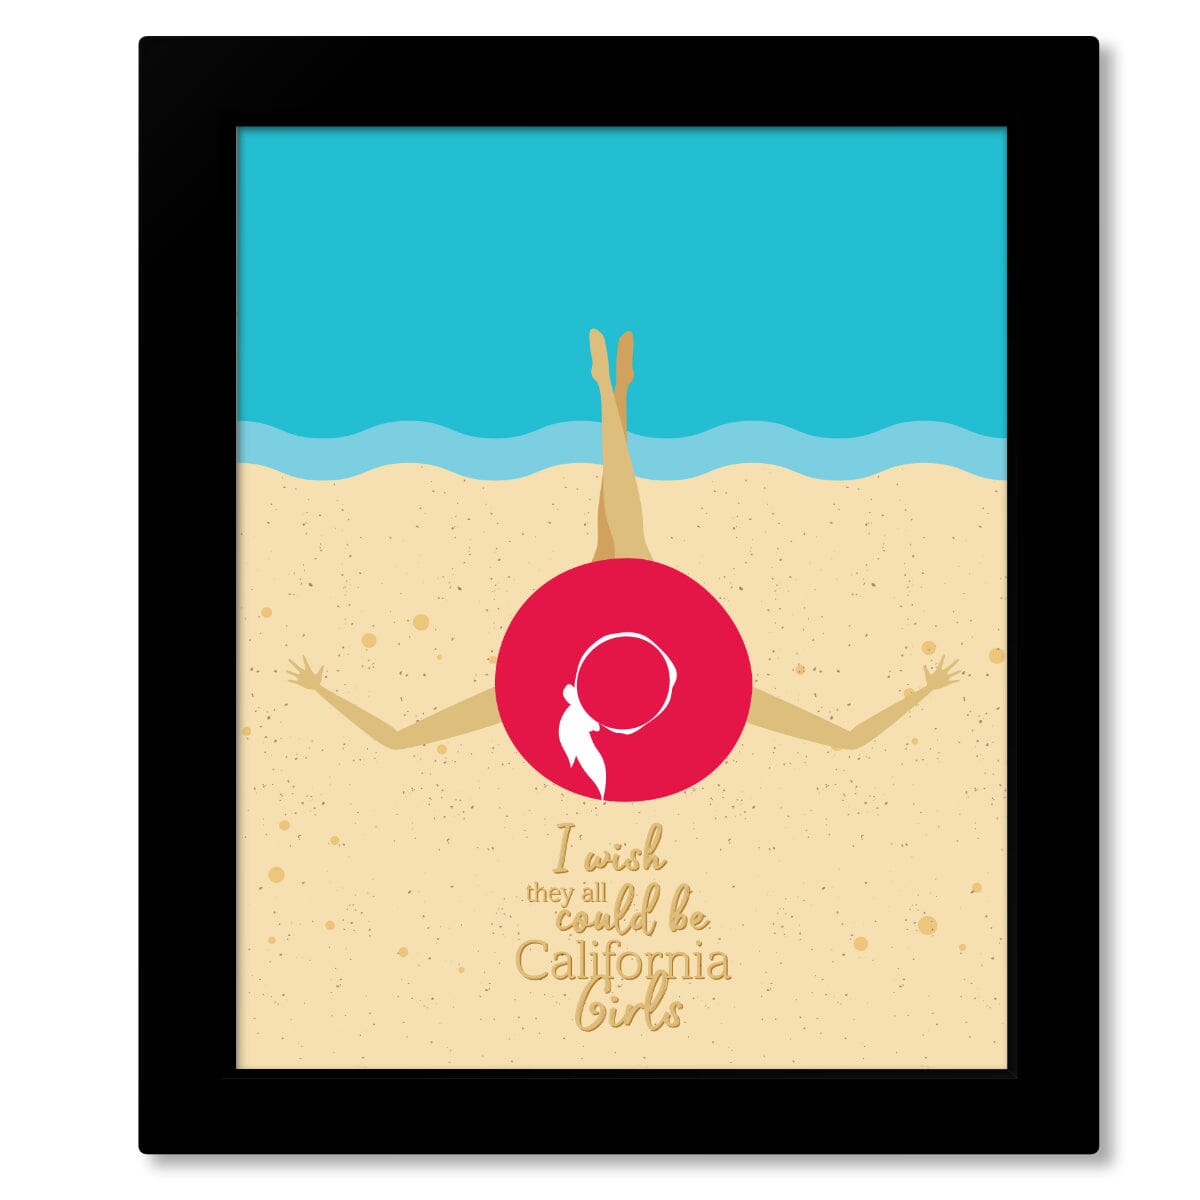 California Girls by Beach Boys - Music Lyric Poster Art Song Lyrics Art Song Lyrics Art 8x10 Framed Print (without mat) 